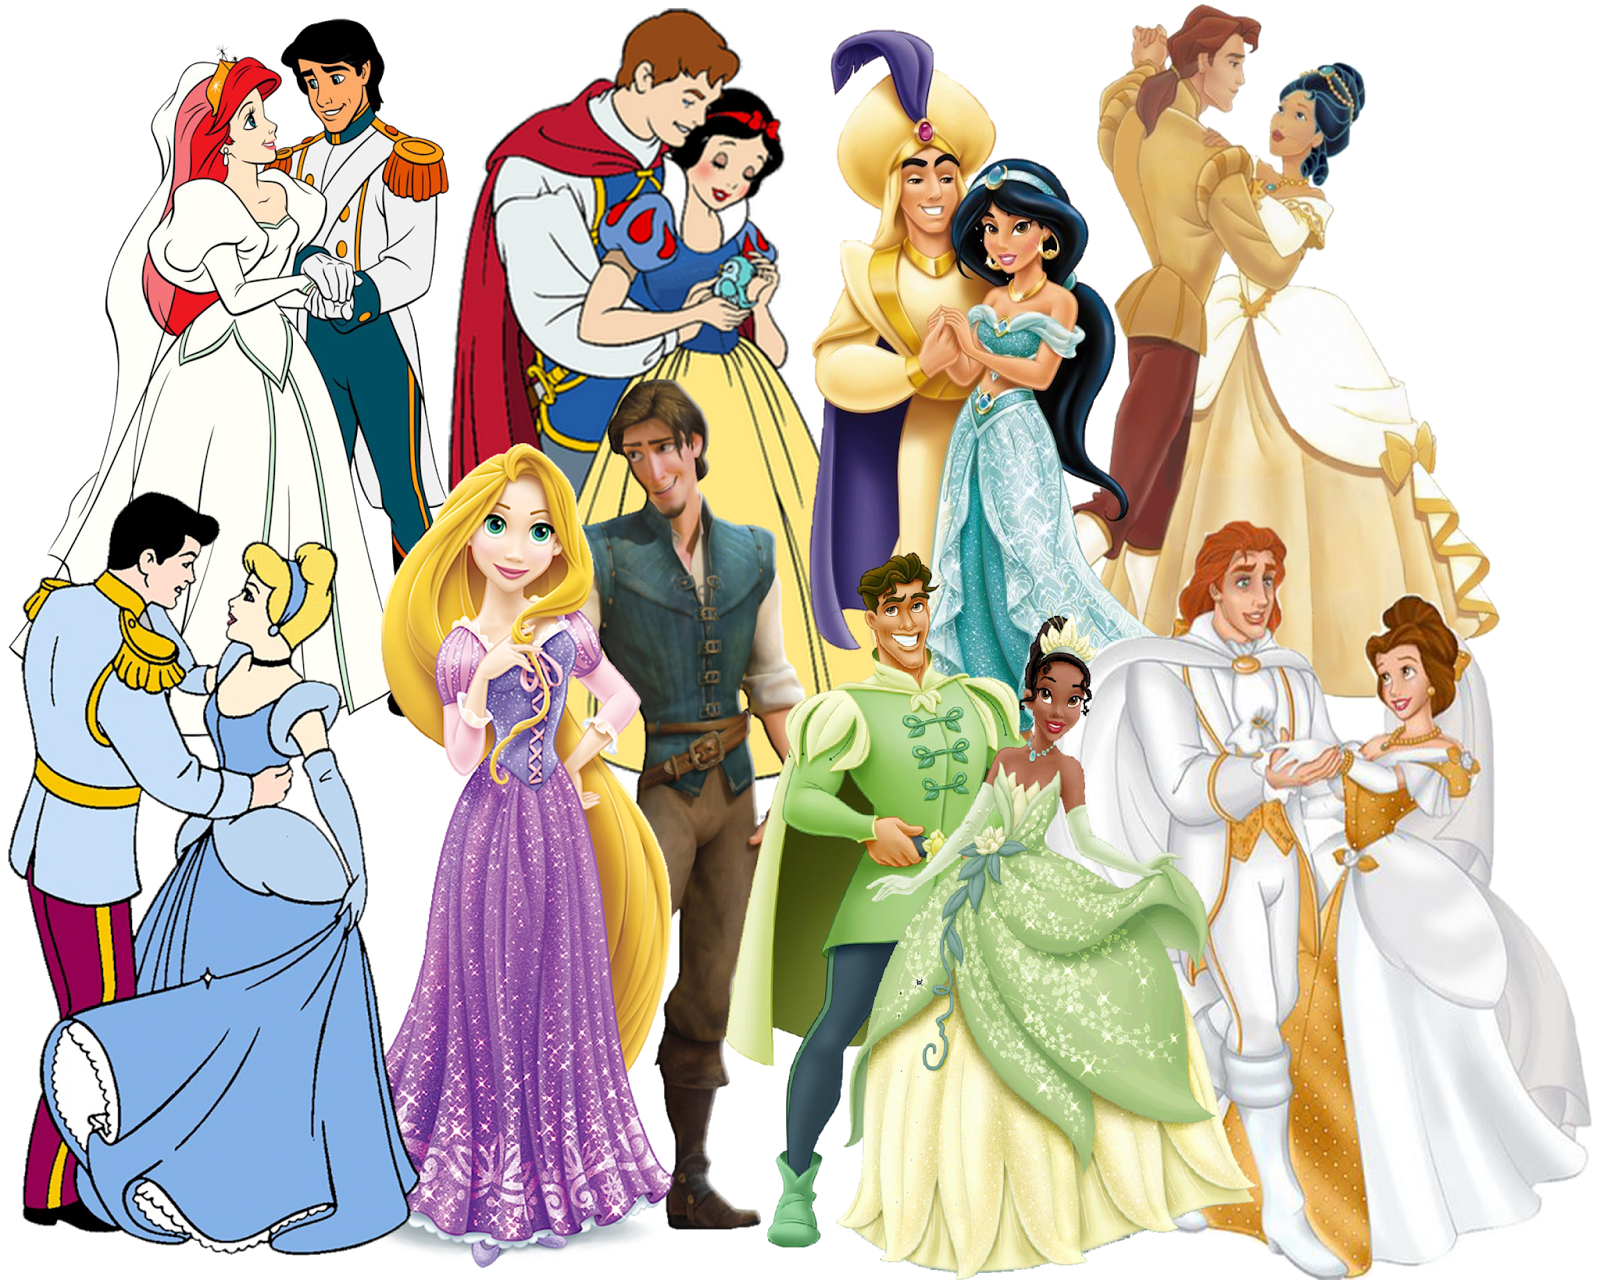 Os príncipes e as princesas da Disney na vida real (21 fotos)